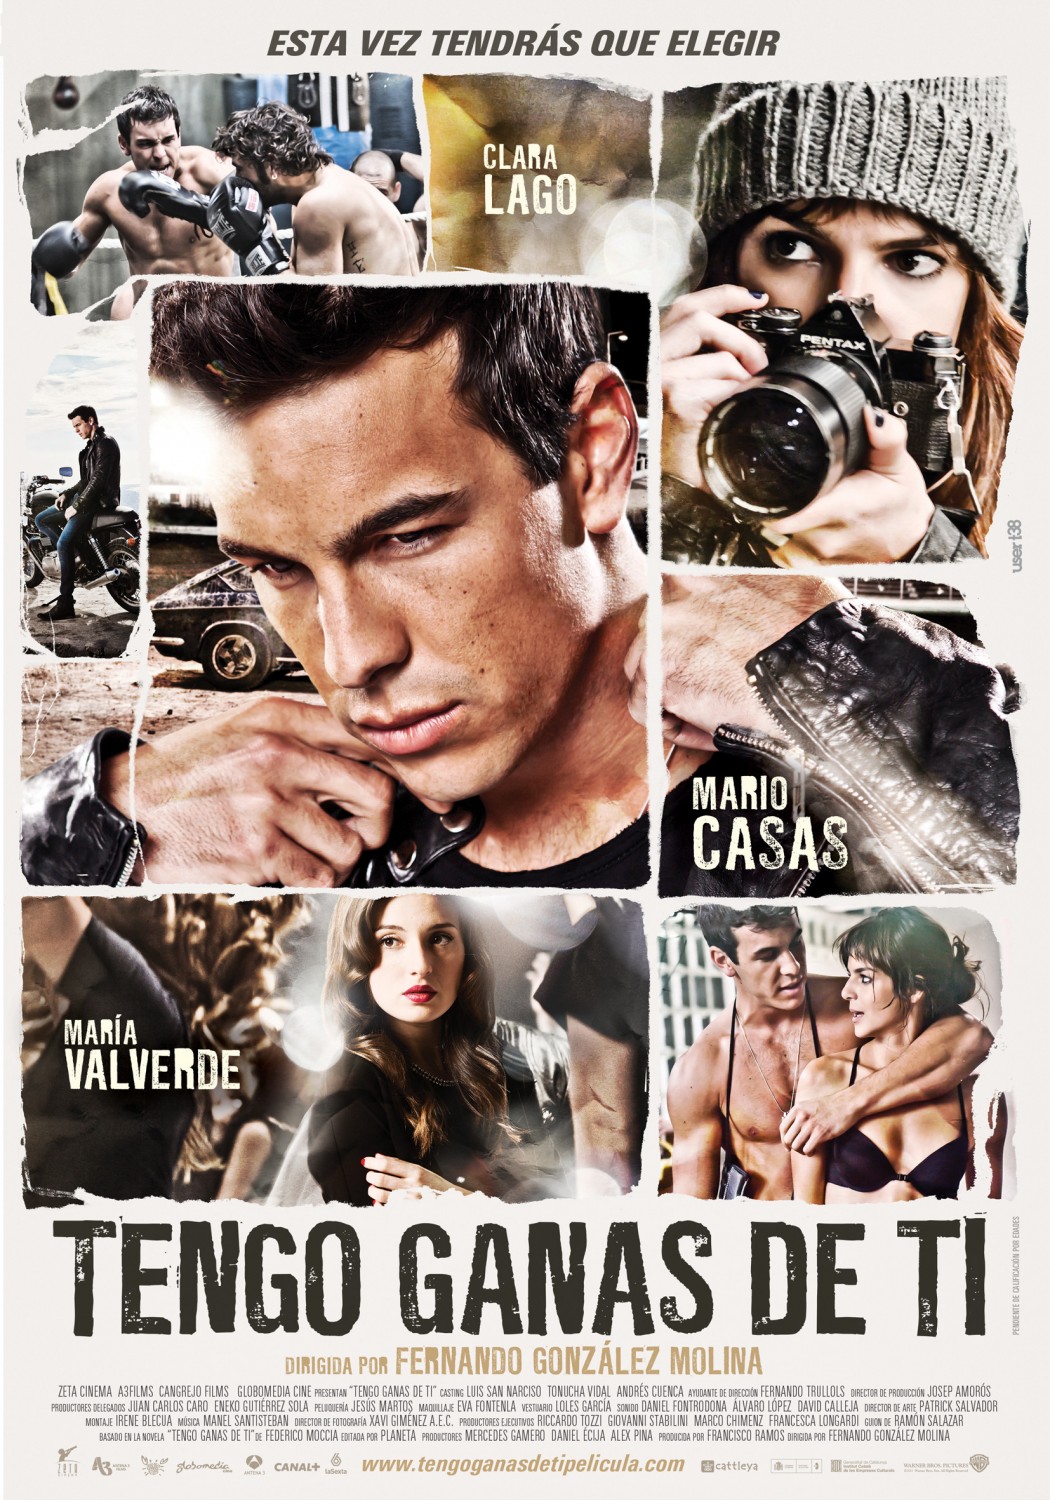 Extra Large Movie Poster Image for Tengo ganas de ti (#3 of 3)